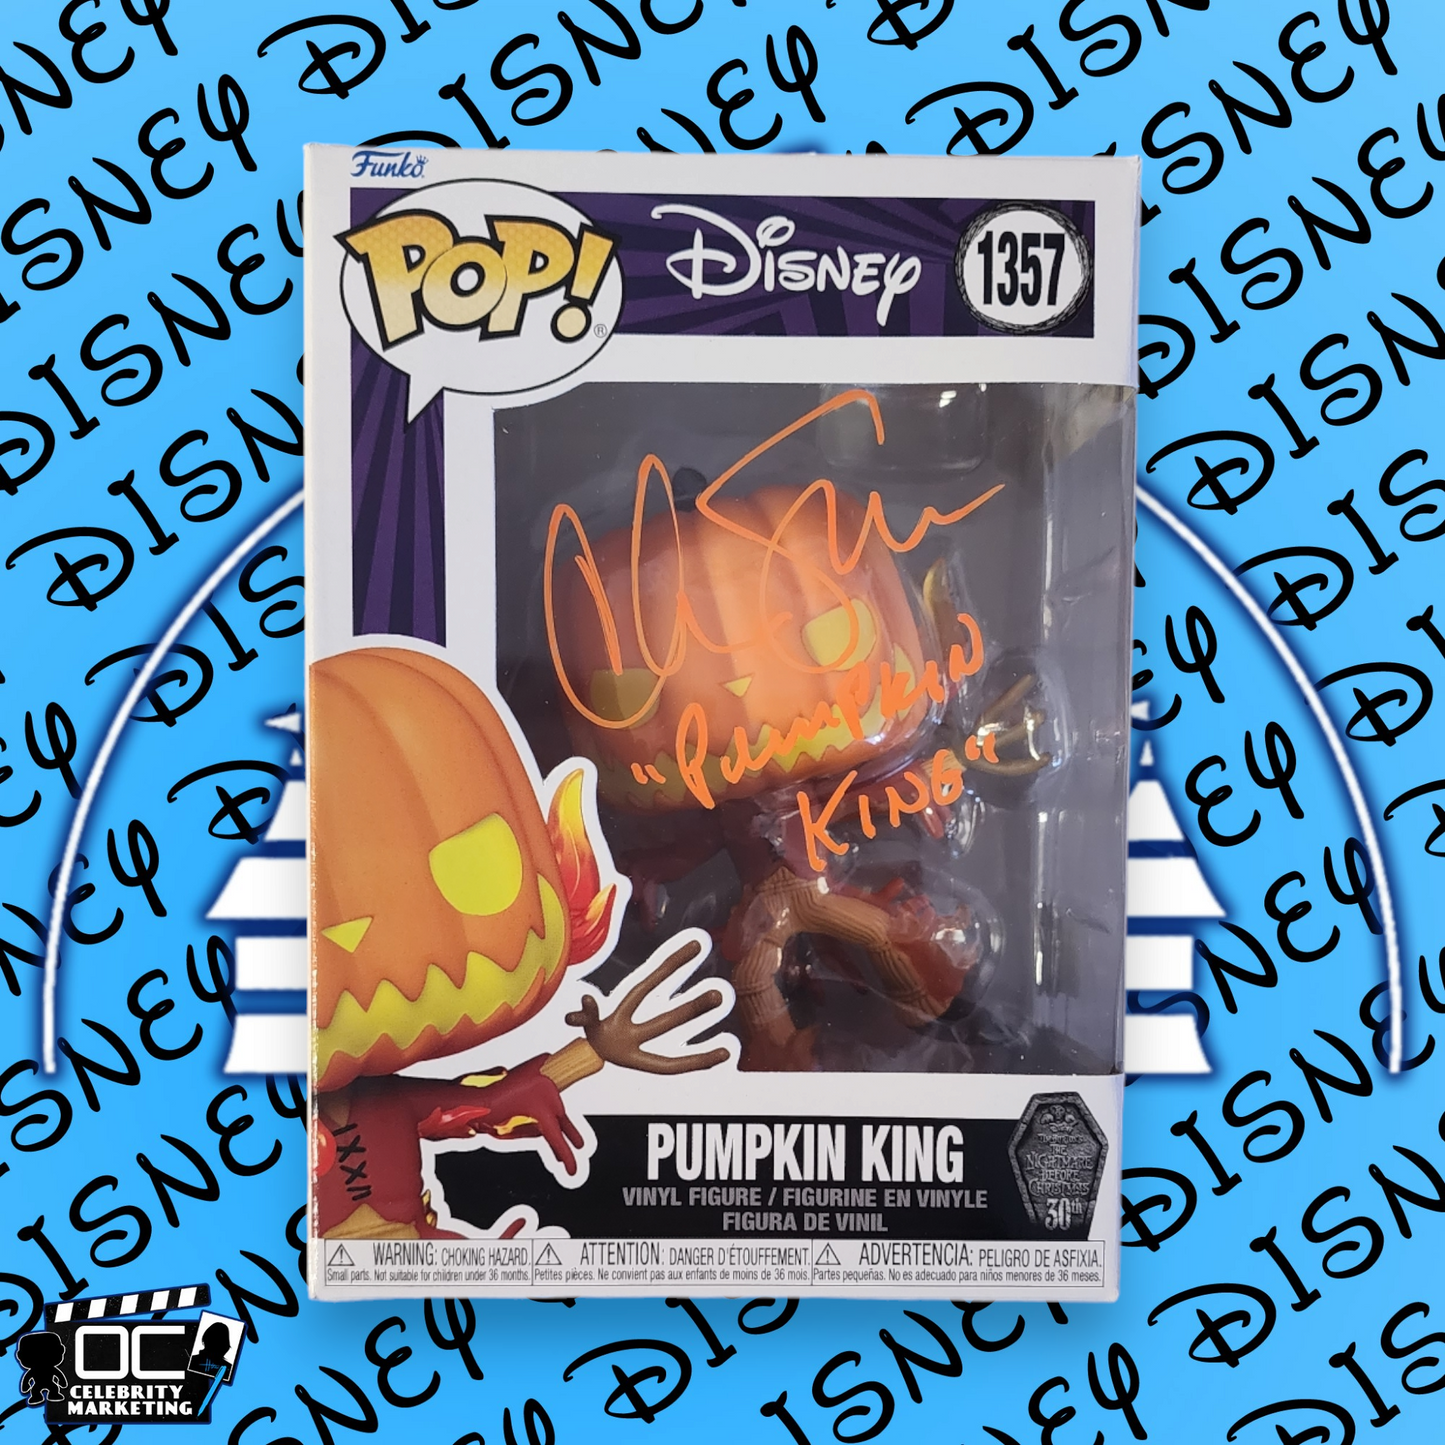 Chris Sarandon signed Pumpkin King Funko Disney NBC #1357 OCCM QR code Auto